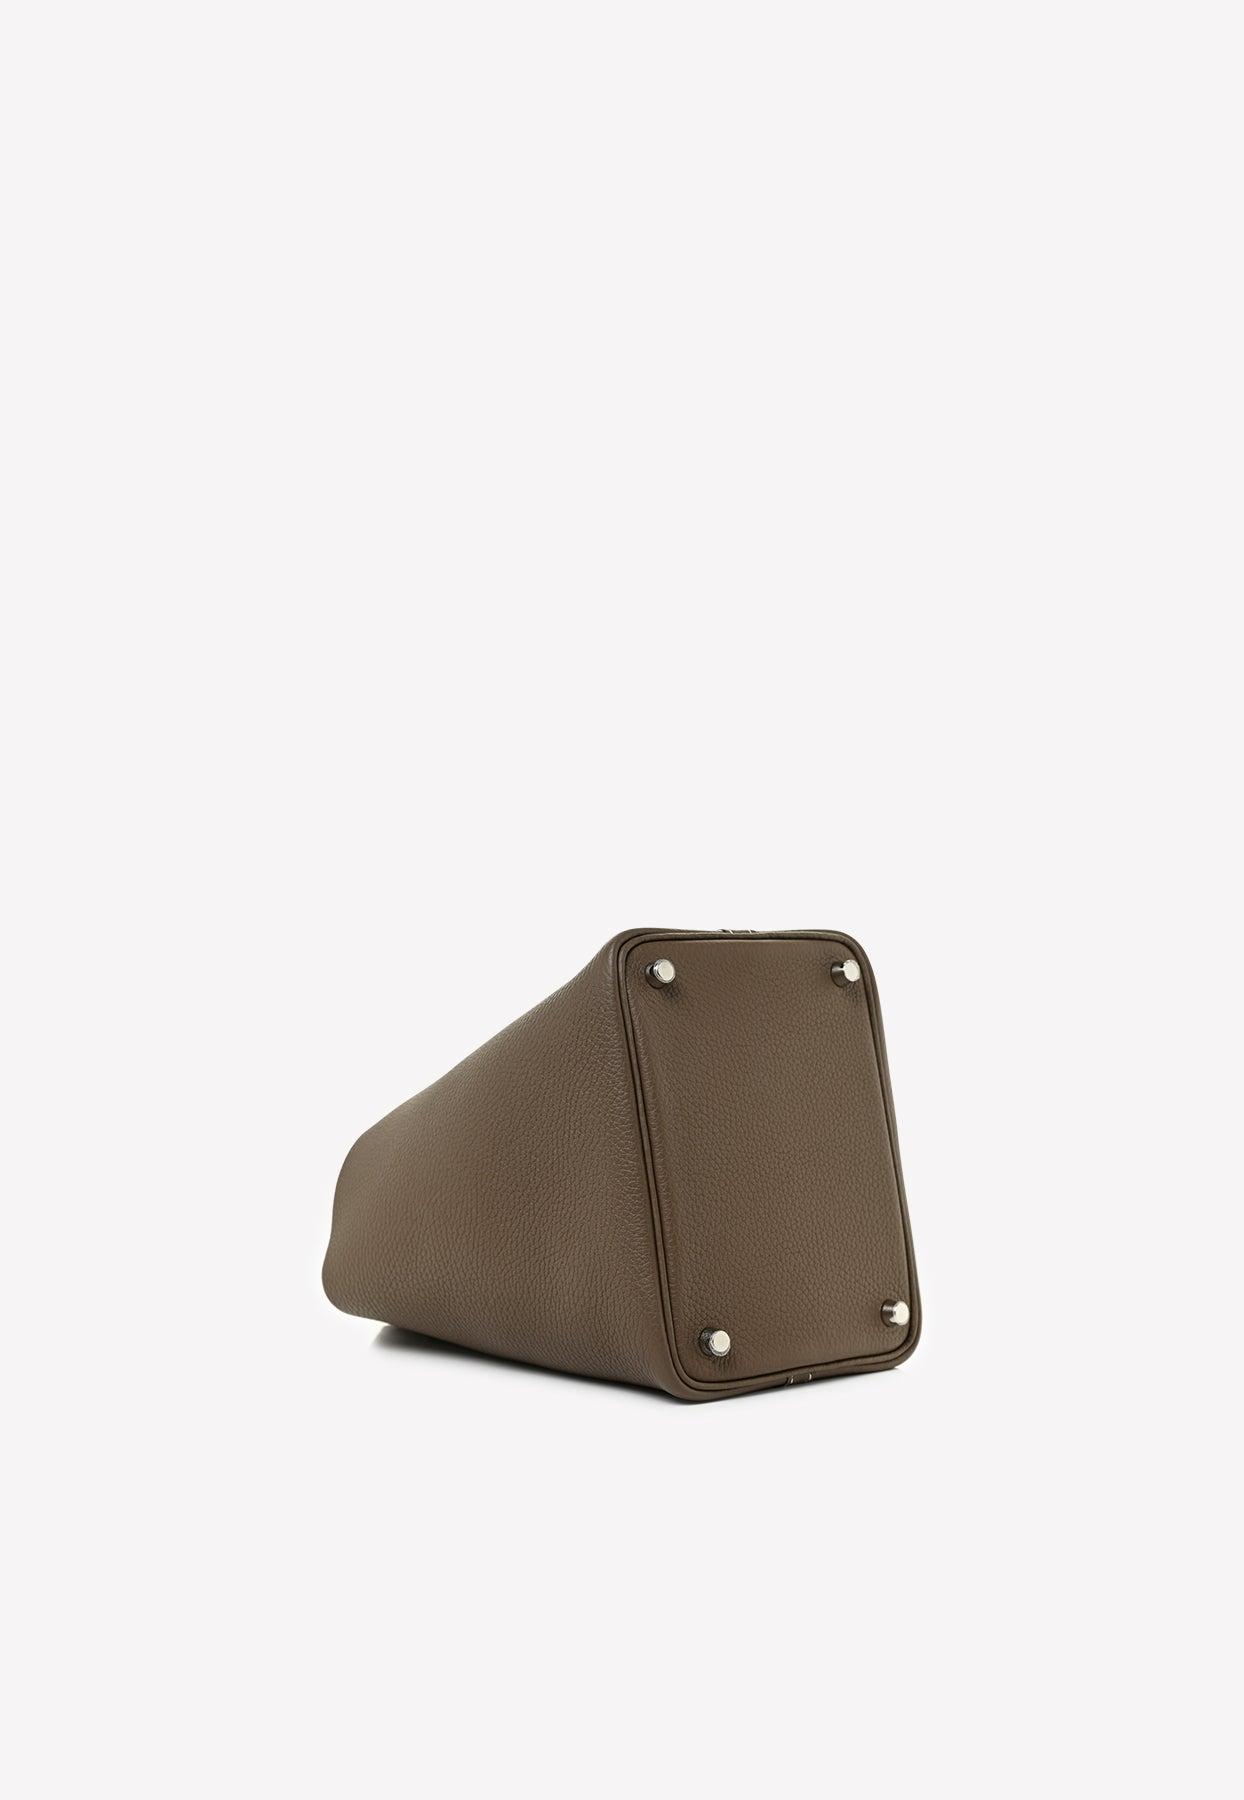 Hermes Etoupe Gray Picotin Lock 18 PM Gold Hardware Handbag Bag